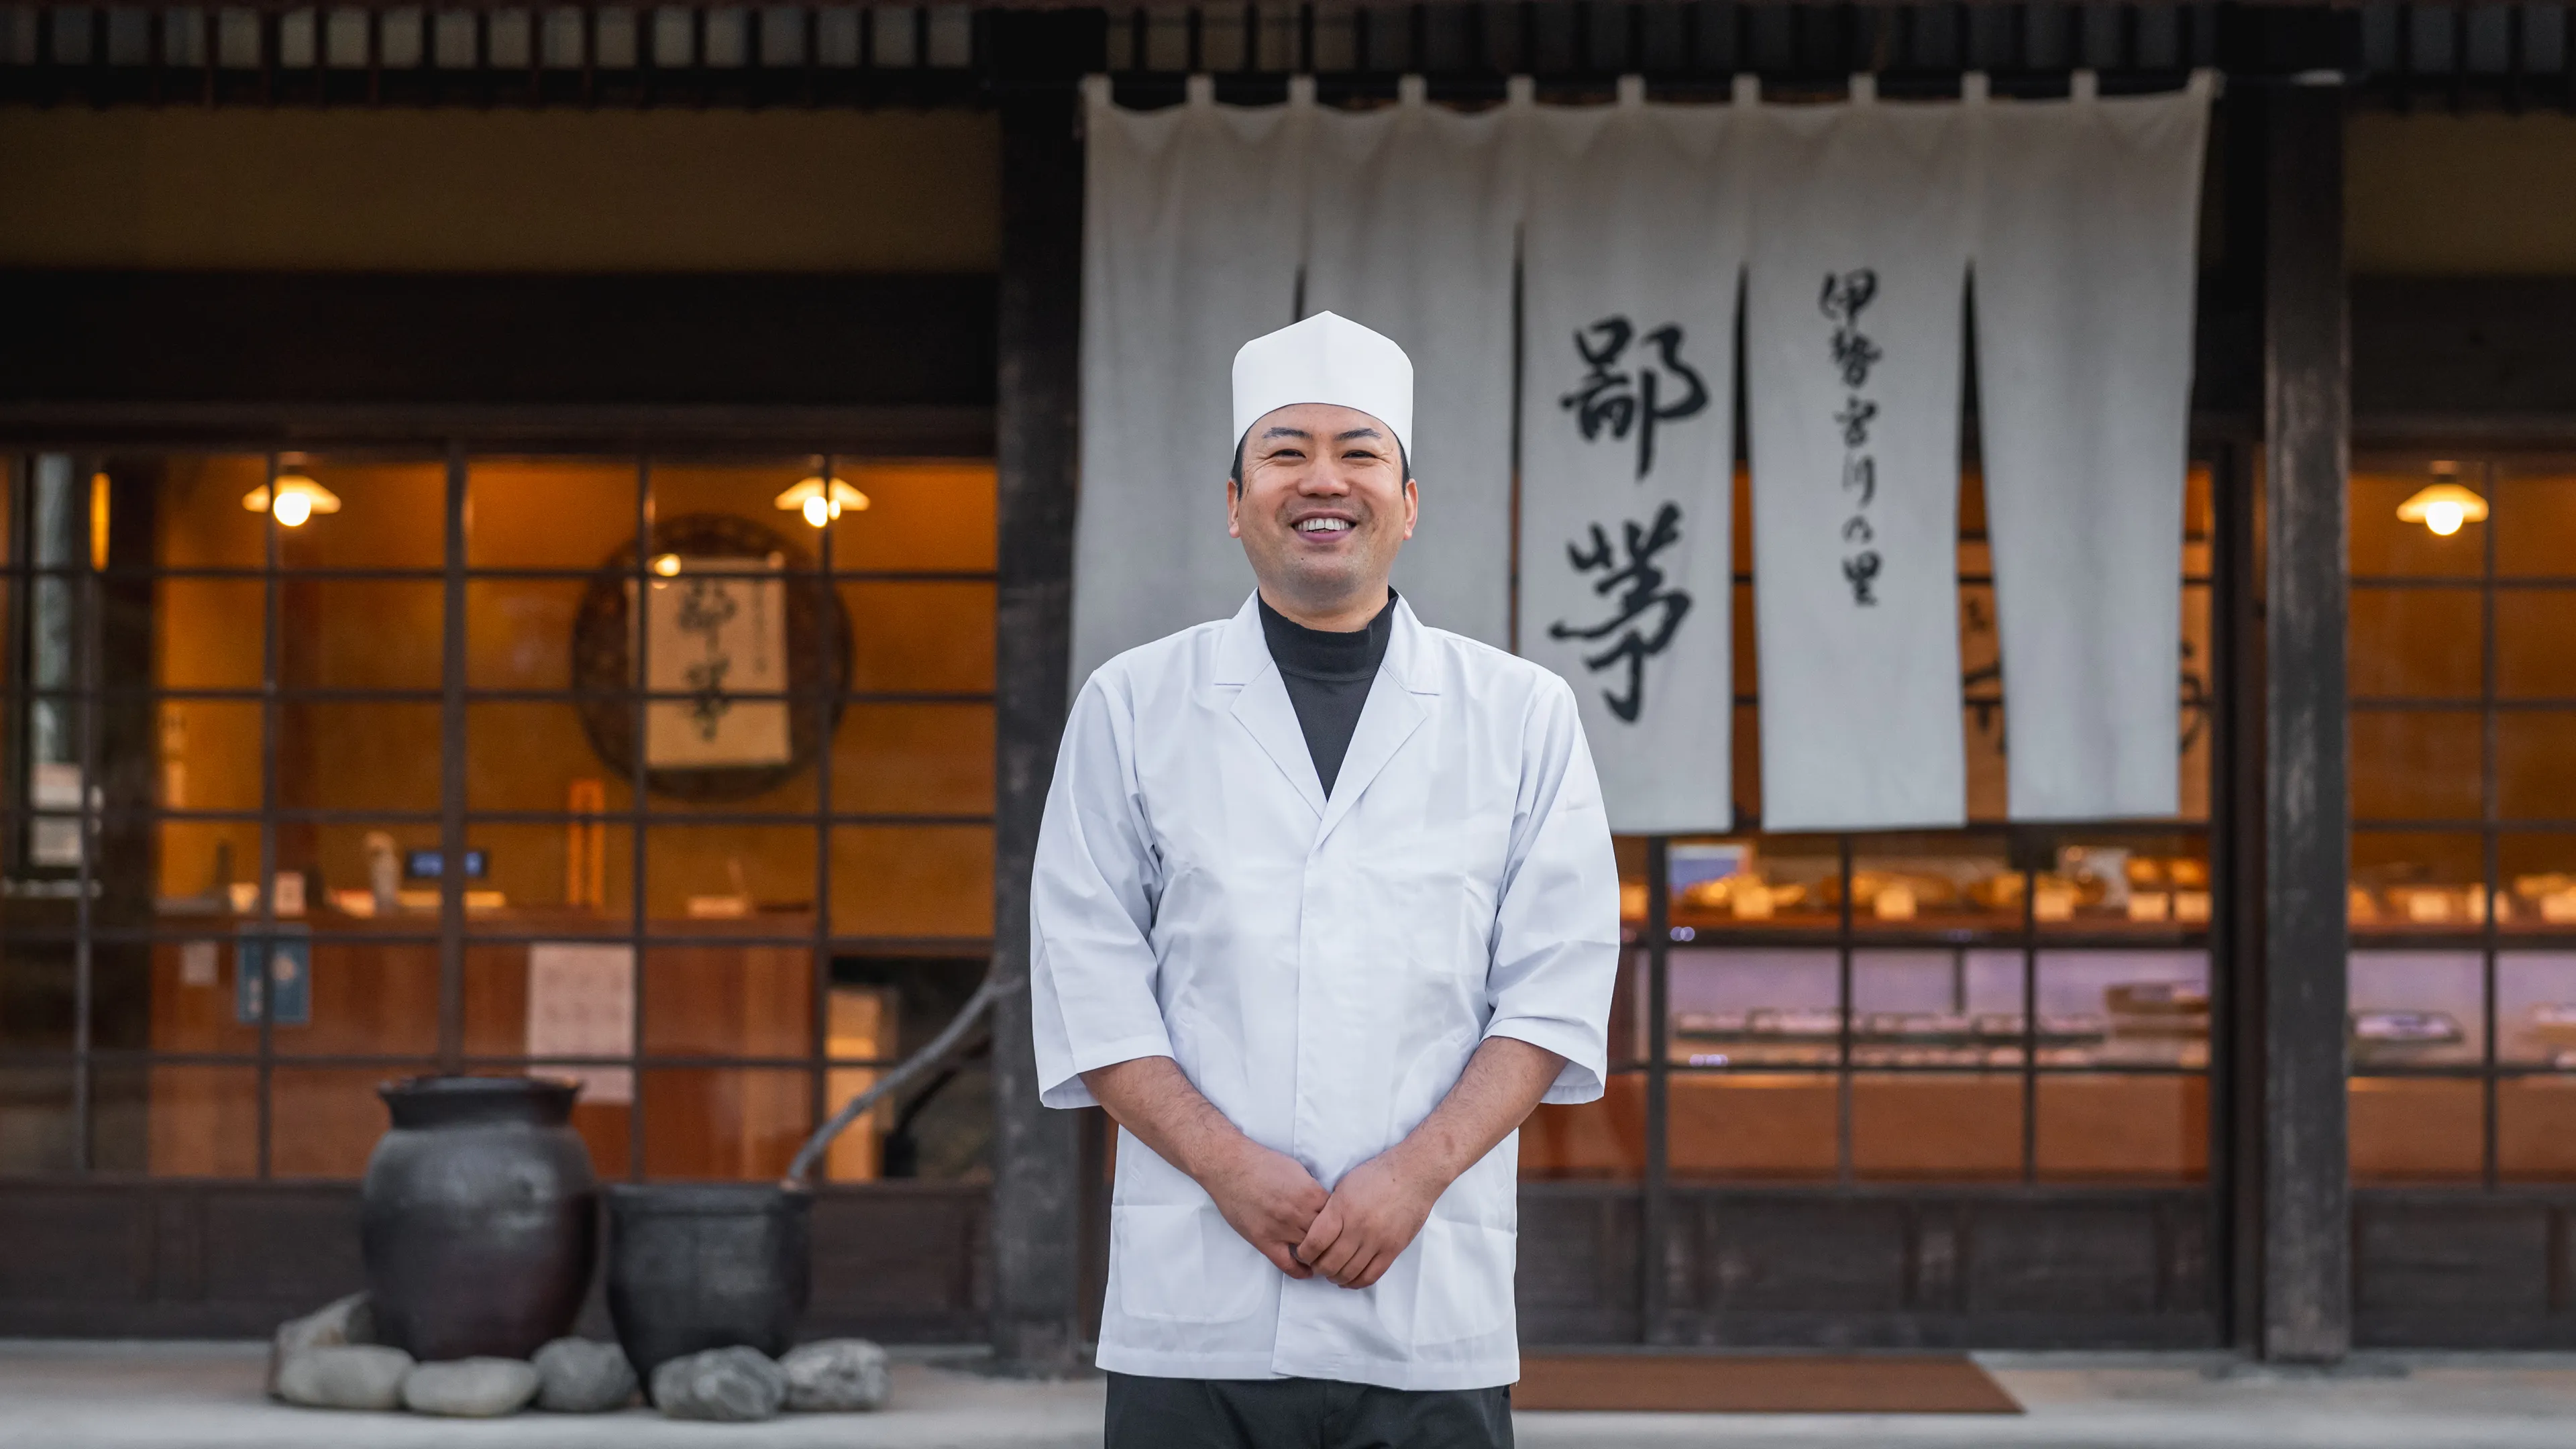 A 200-year-old Sake brewery visit and Sake pairing course at Hinakaya, a Michelin starred restaurant